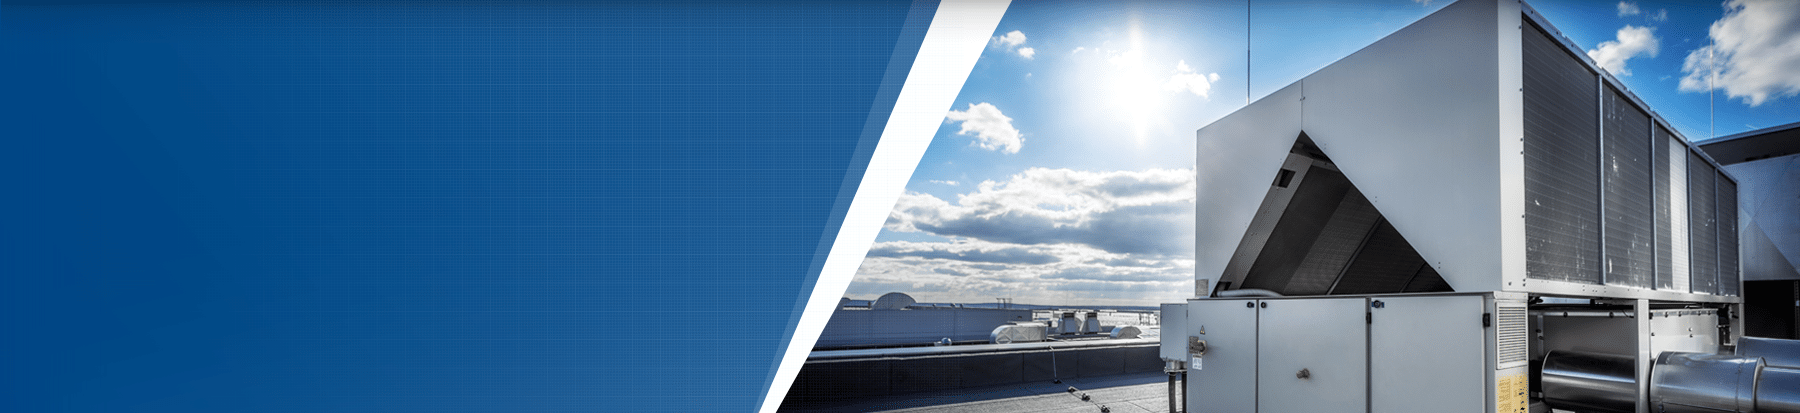 facilityACxE header image of rooftop unit